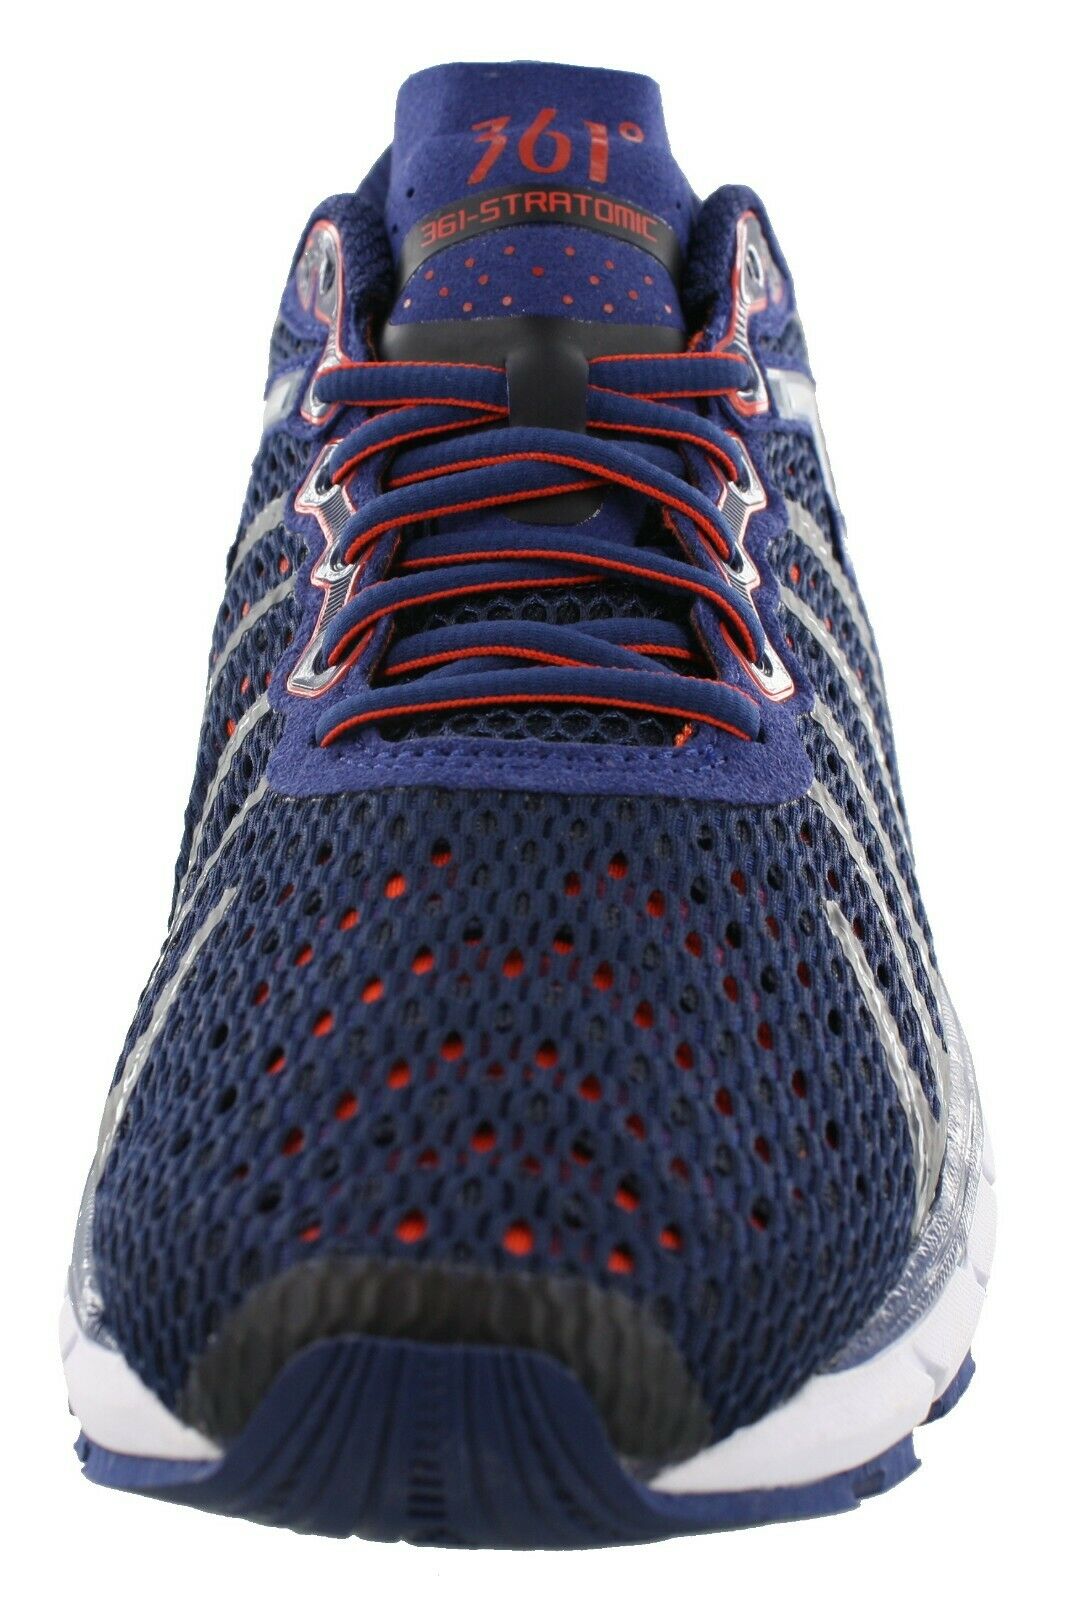 361 Degrees Men's Stratomic Running Shoes - image 3 of 5